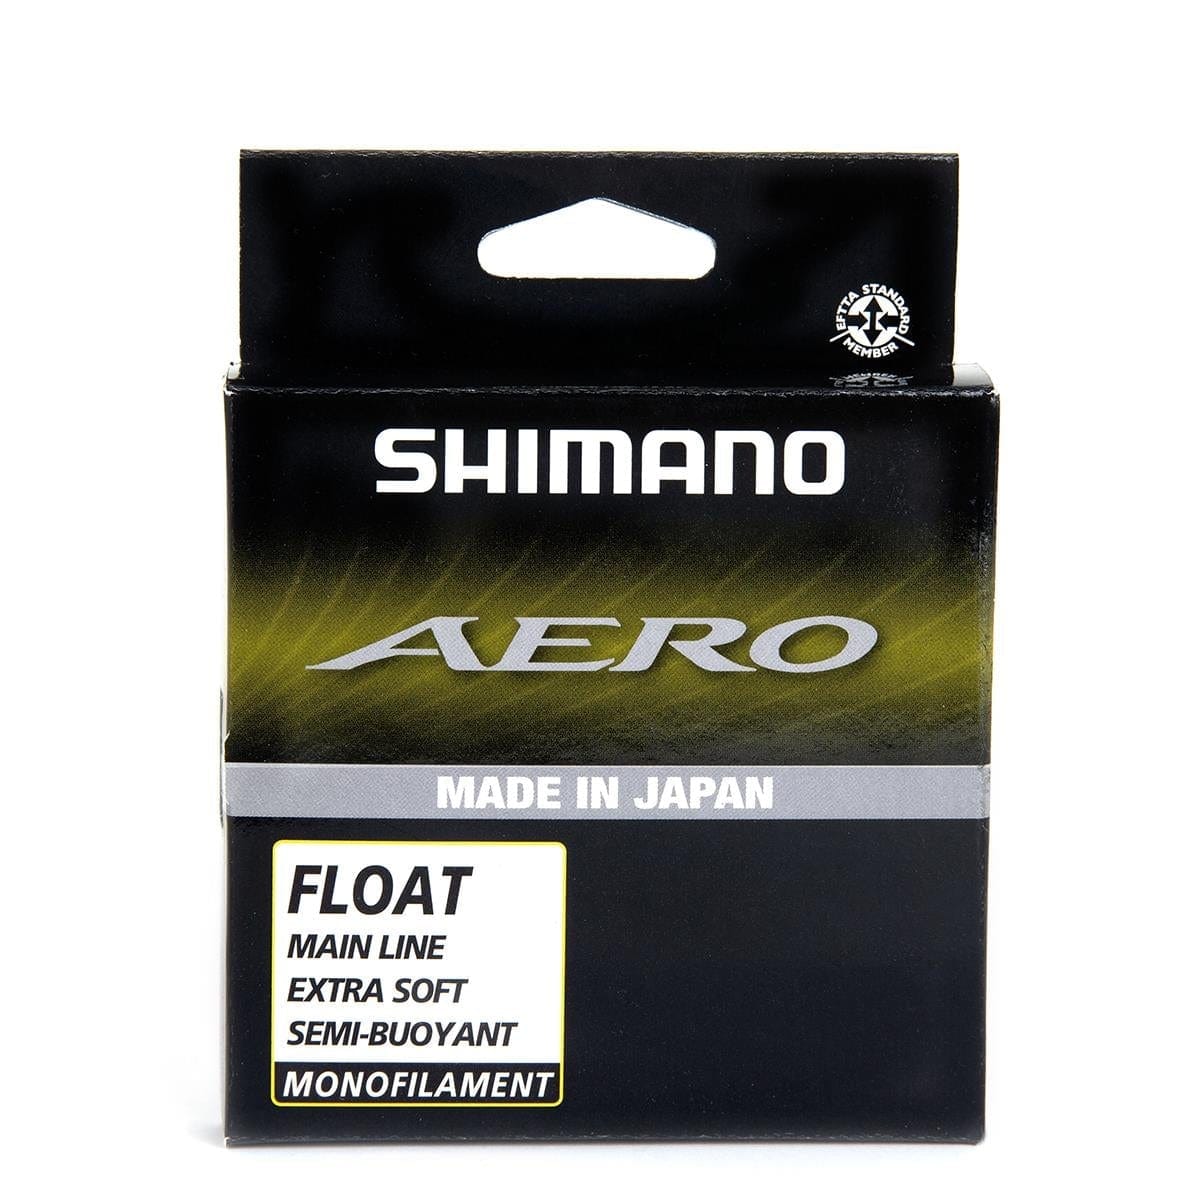 Shimano Aero Float Line.